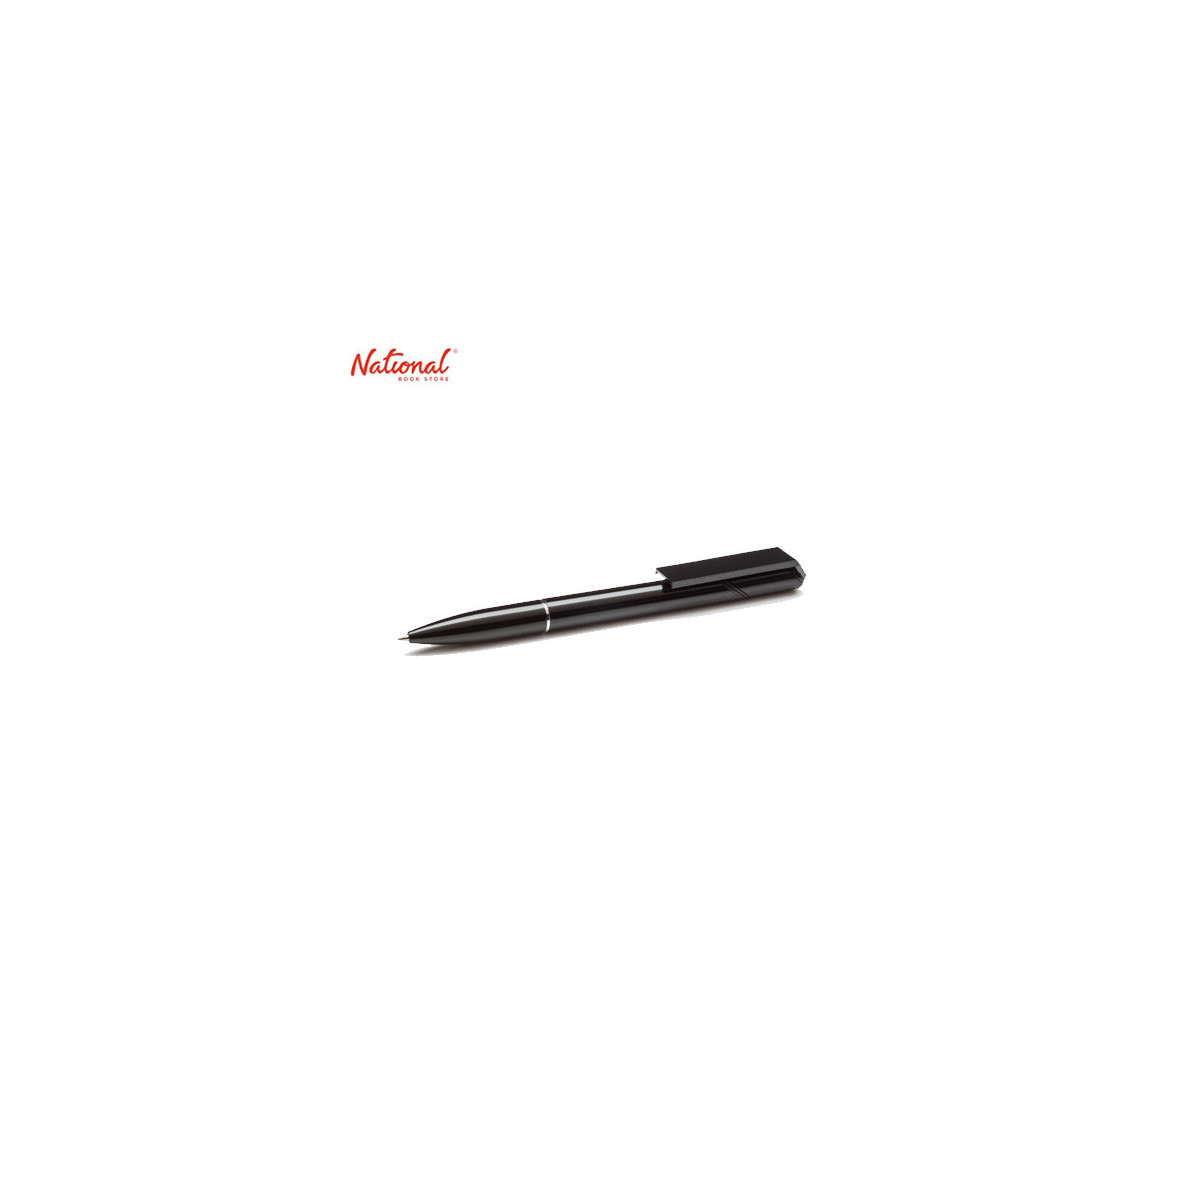 Prostar Twist Action Aluminum Fine Ballpoint Pen with 16GB USB PS-70